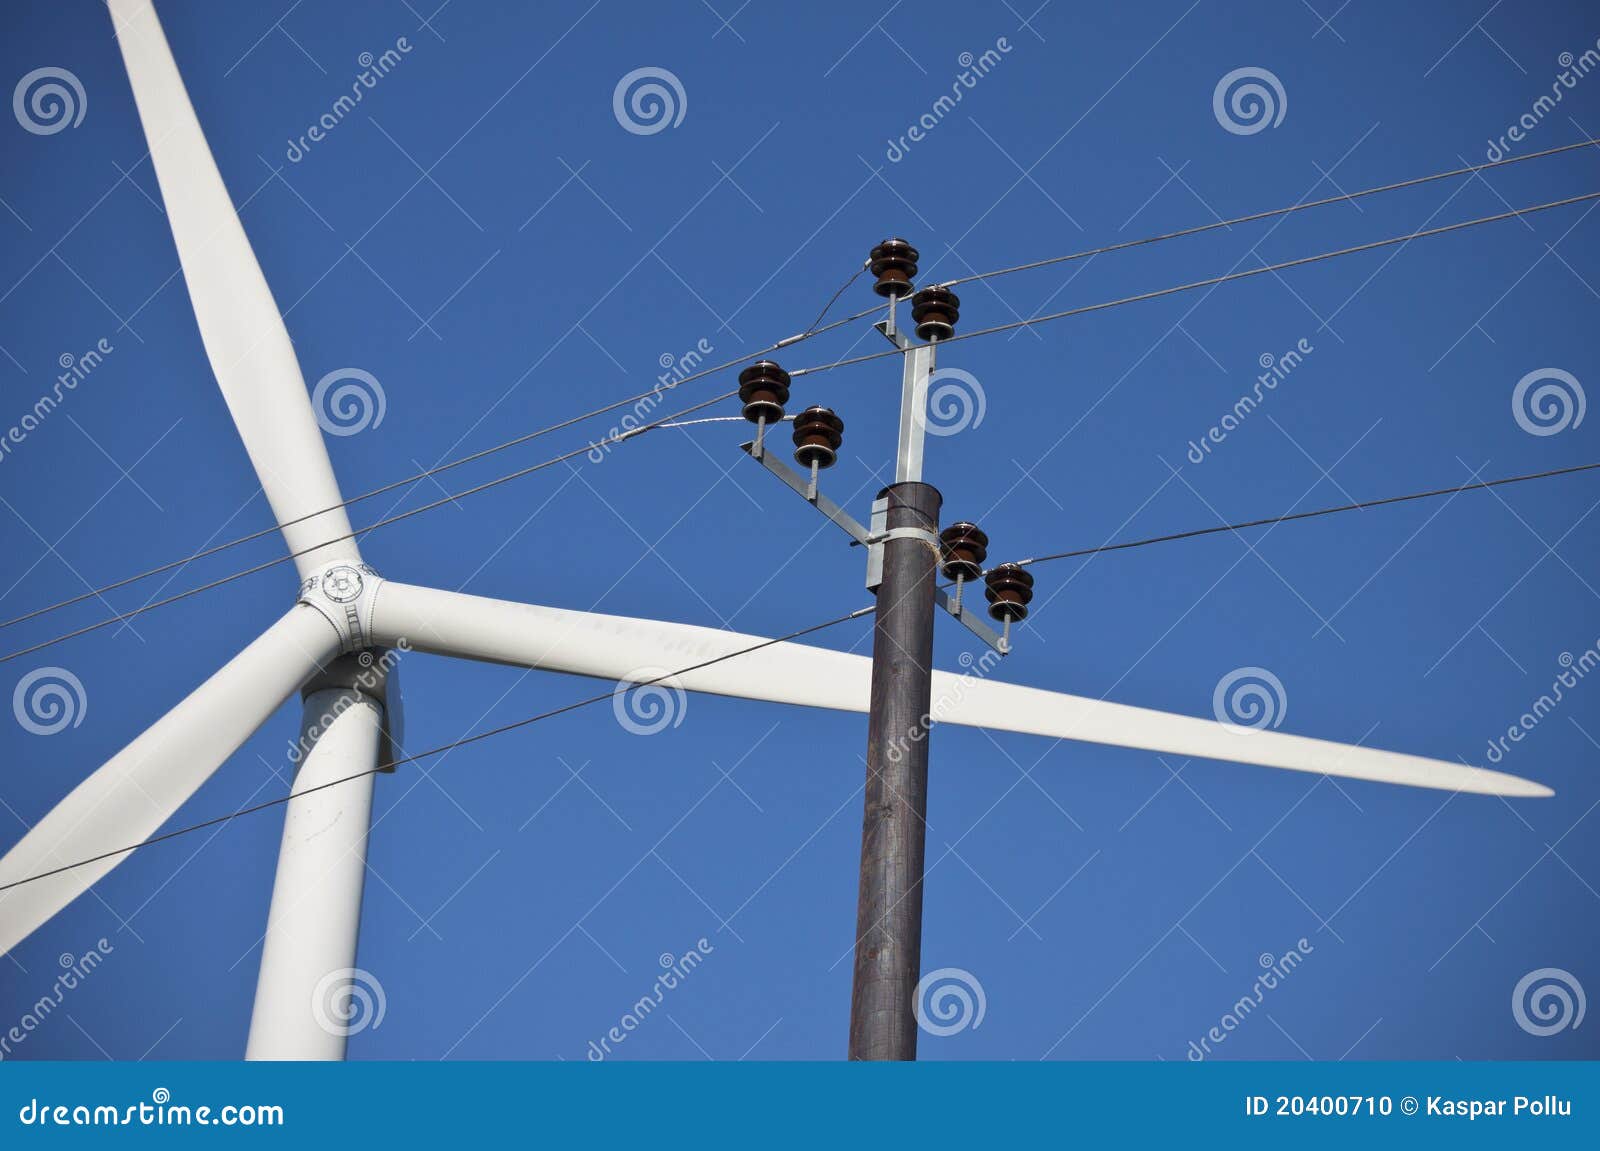 Windmill blades and electric lines located Pakri, Estonia. Photo taken 